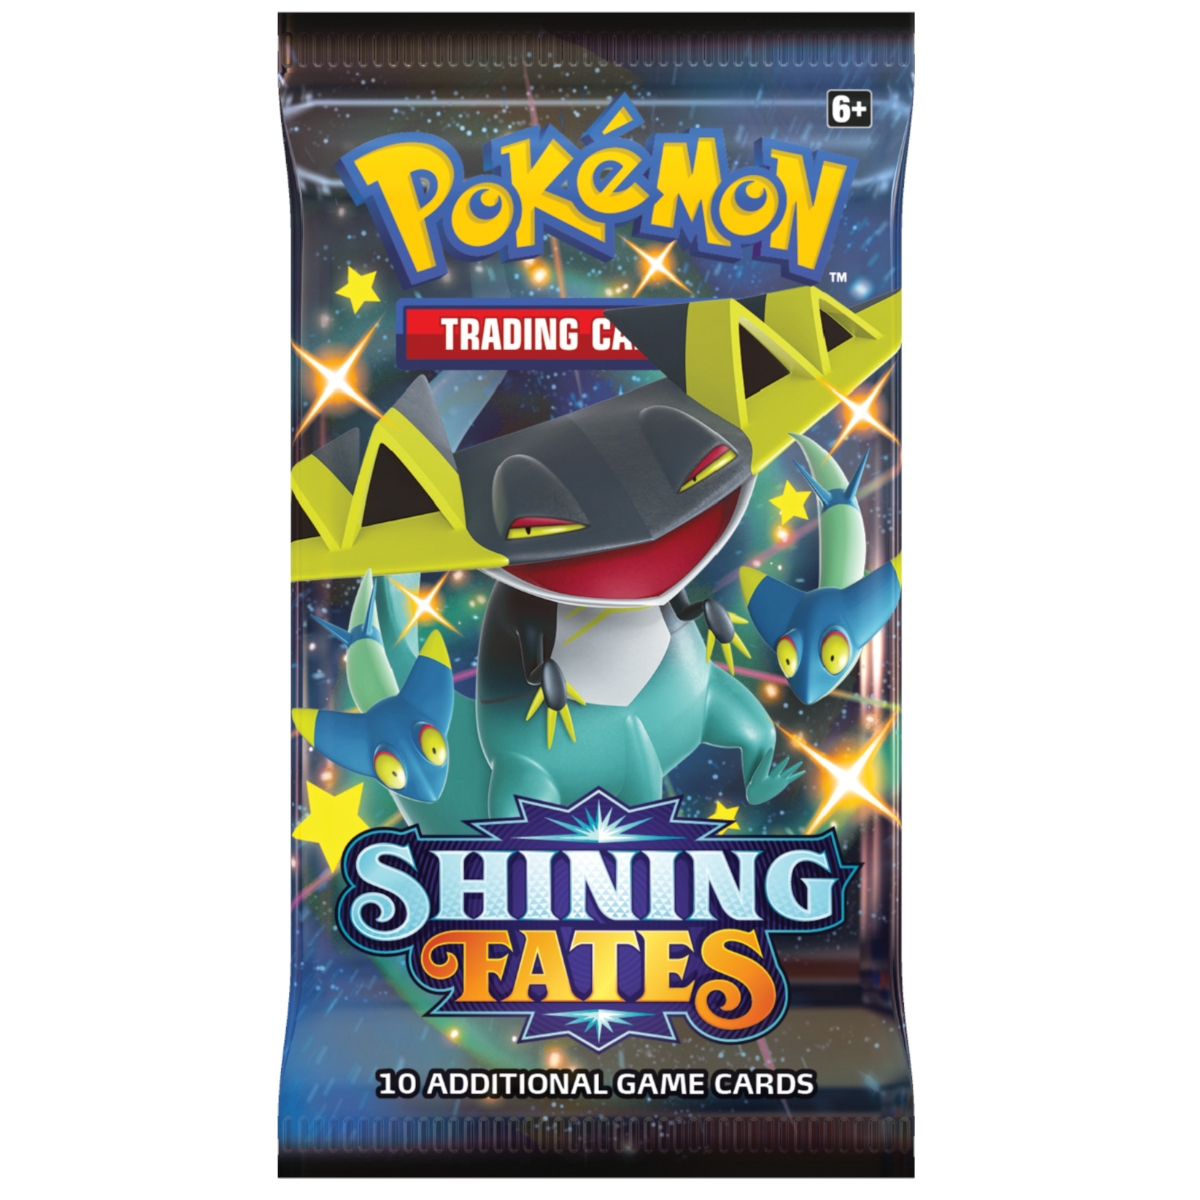 Pokémon - Shining Fates Booster